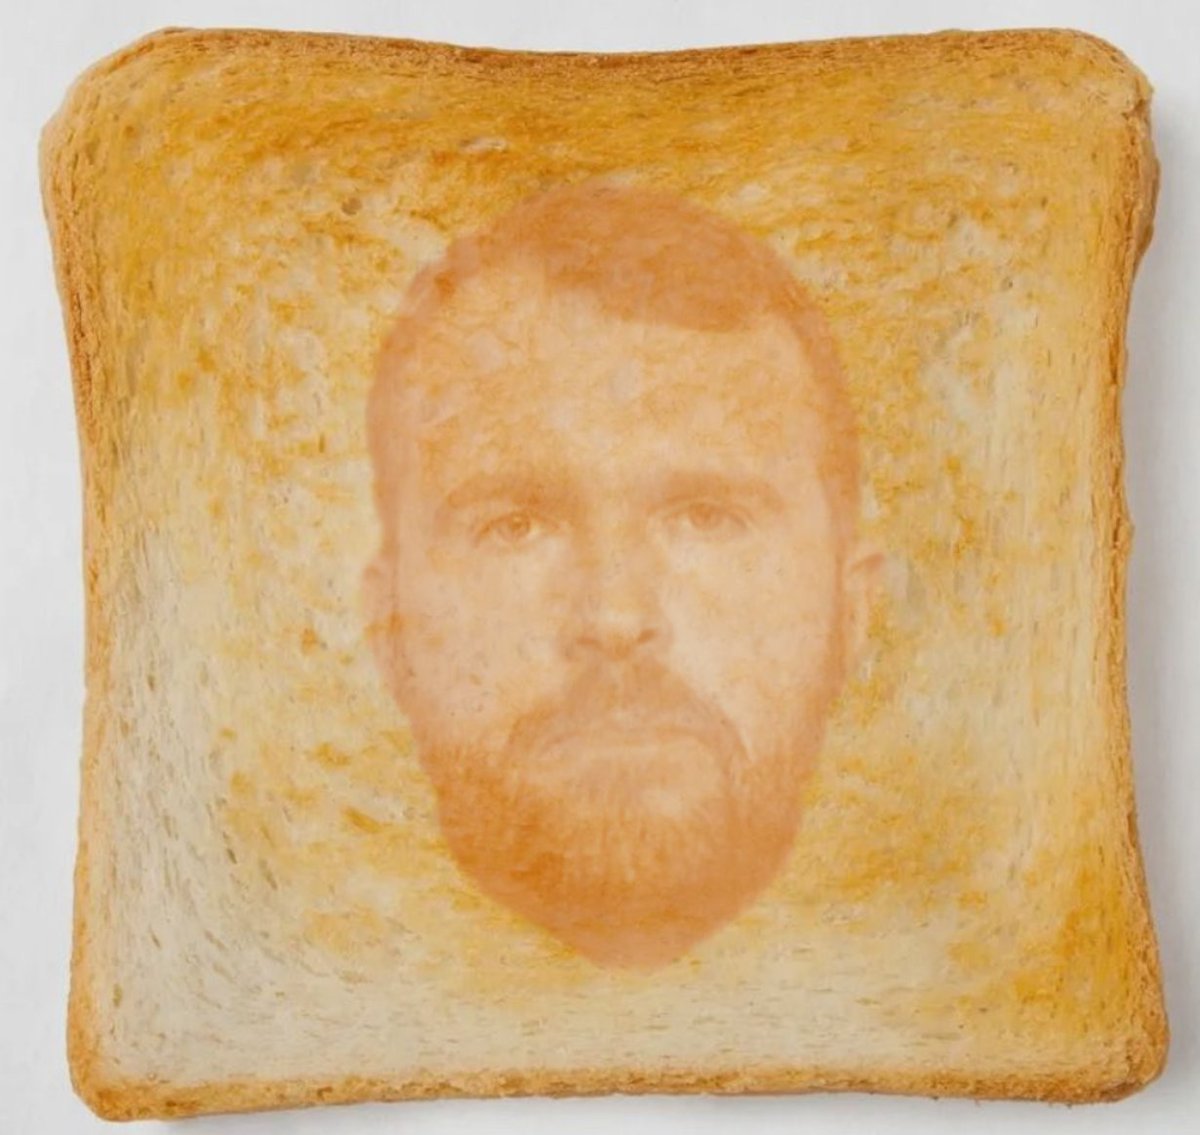 He's toast, isn't he? #Gullis #GullisOut #ToriesOut666